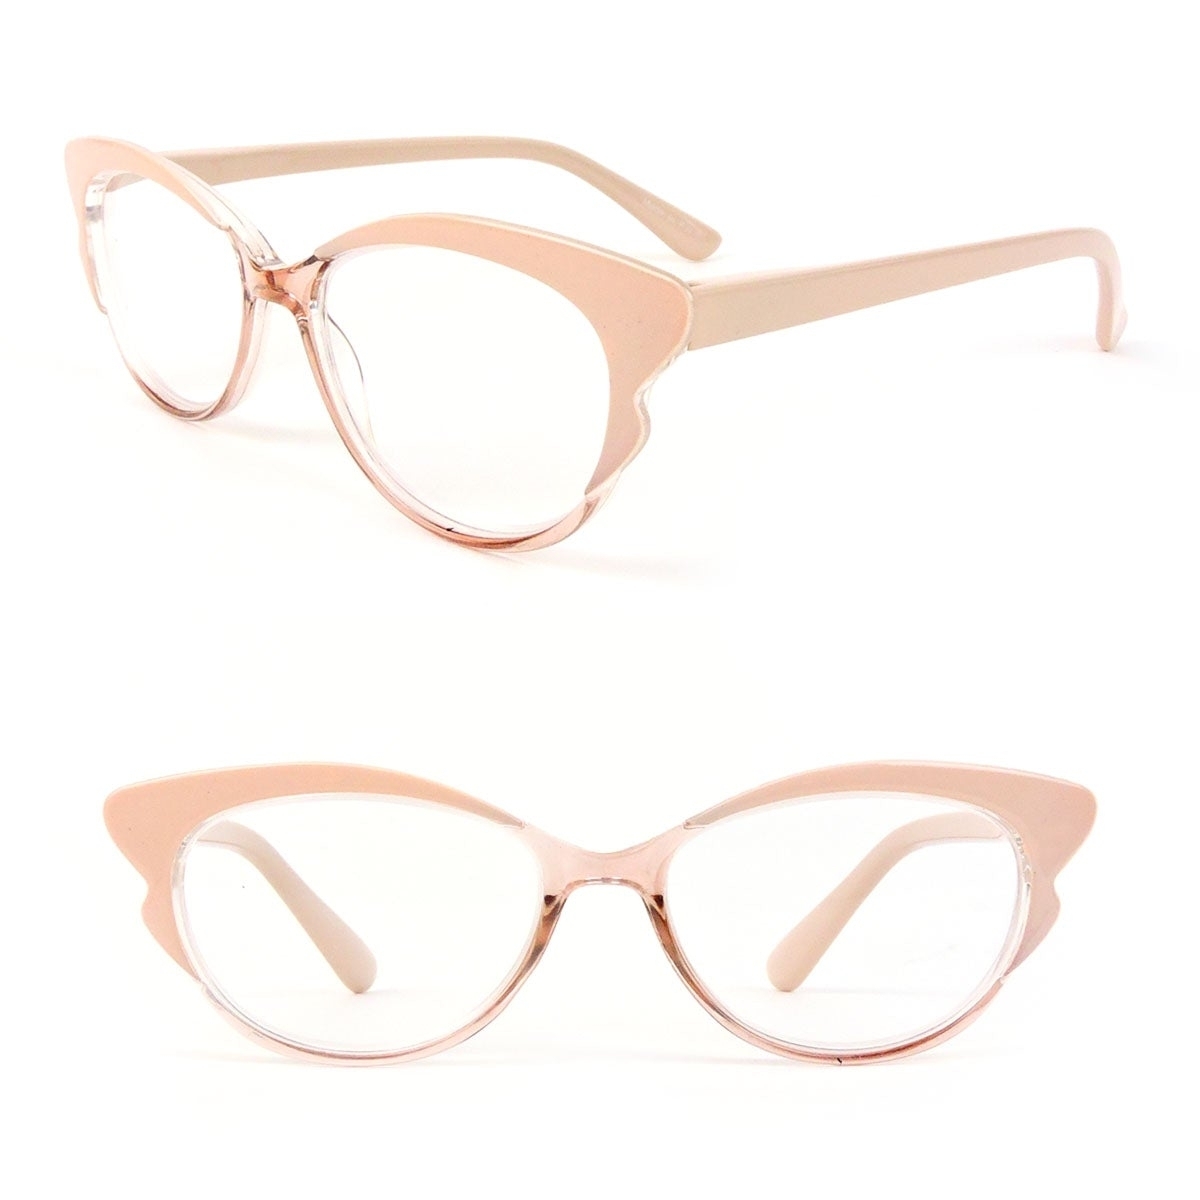 Cat Eye Frame Spring Hinges Fashion Women's Reading Glasses - Beige, +1.75